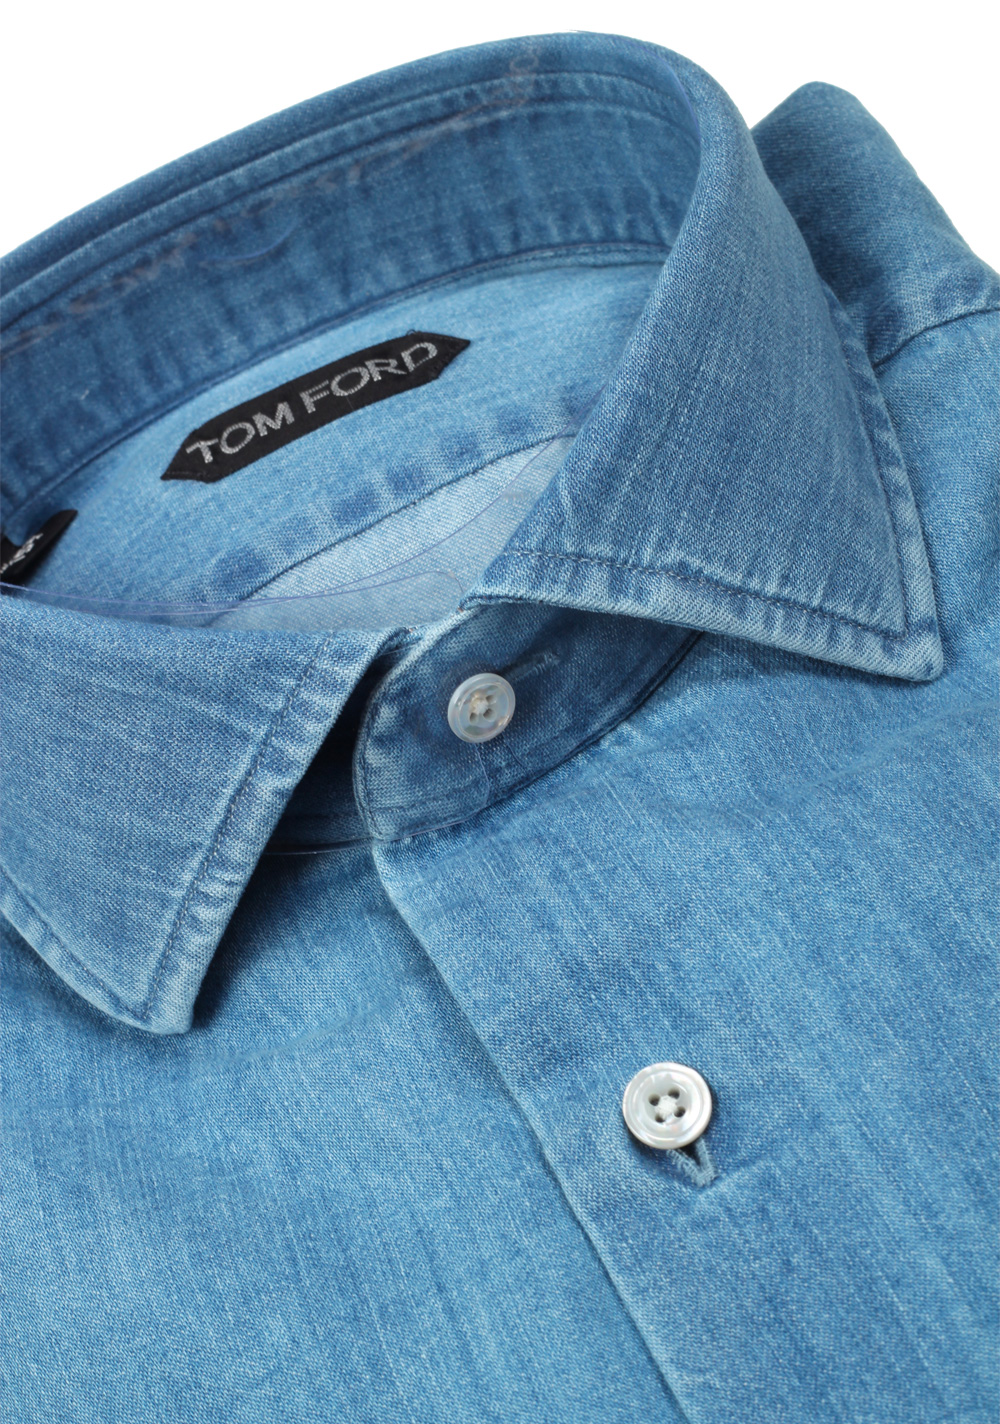 TOM FORD Solid Blue Denim Dress Shirt Size 40 / 15,75 U.S. | Costume Limité